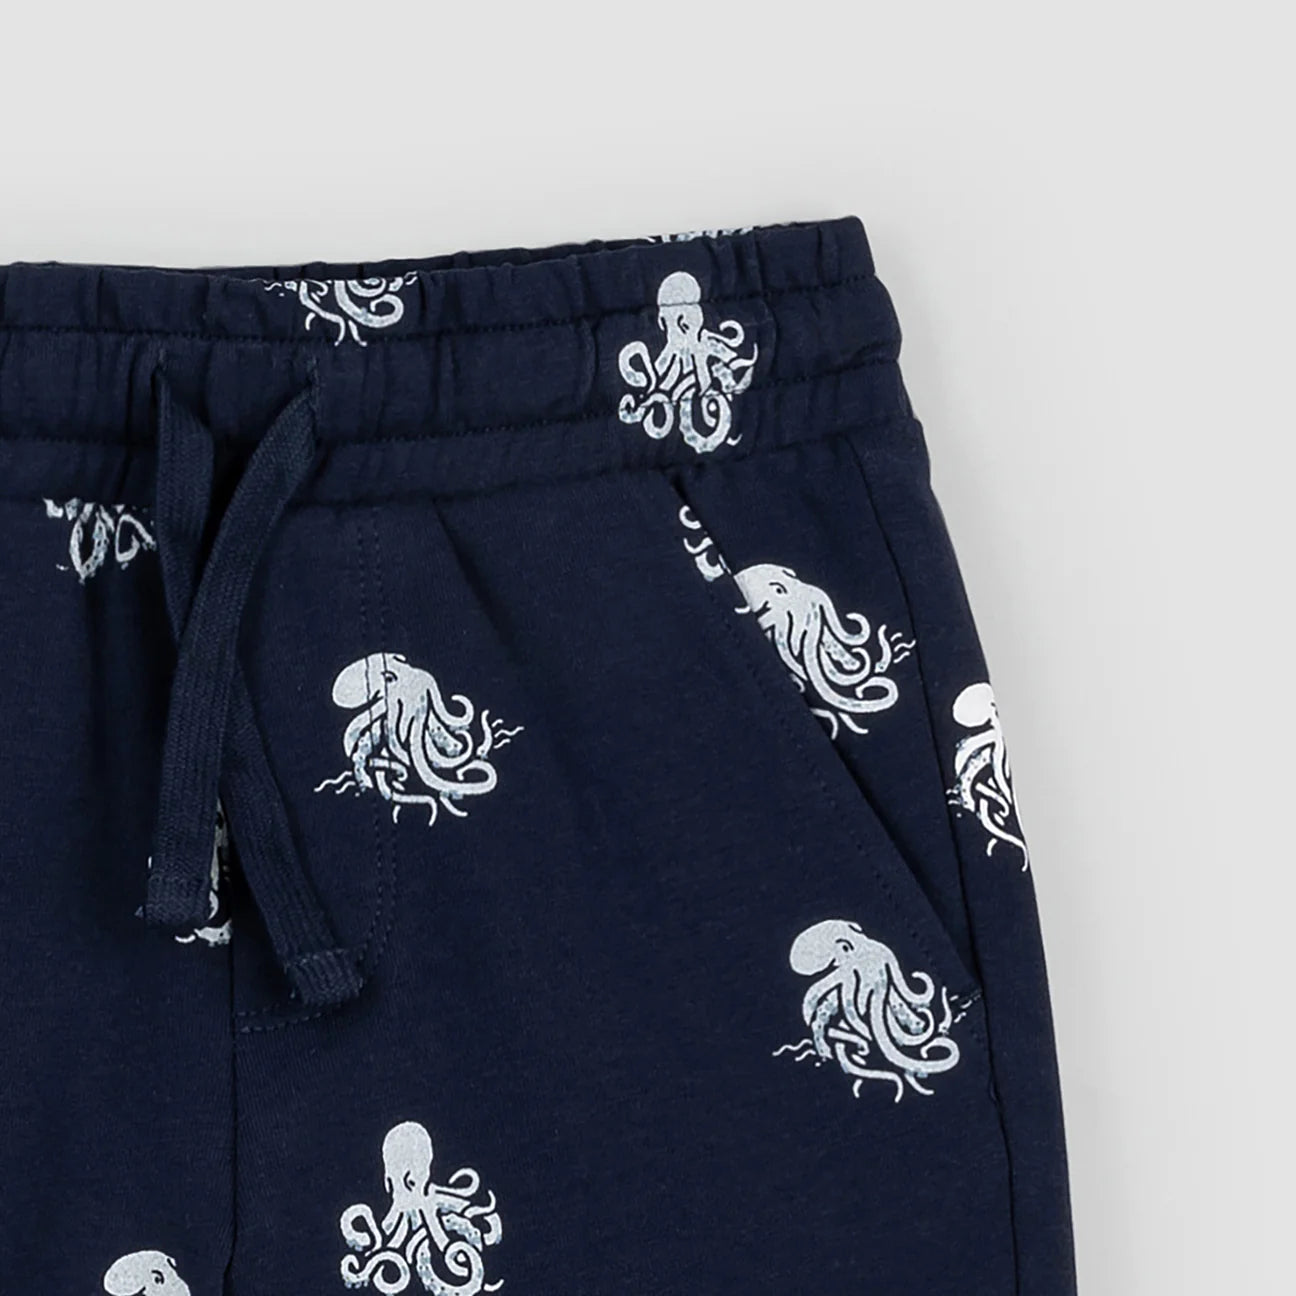 Kraken Print on Navy Short-Sleeve Sweatshirt and Short Set